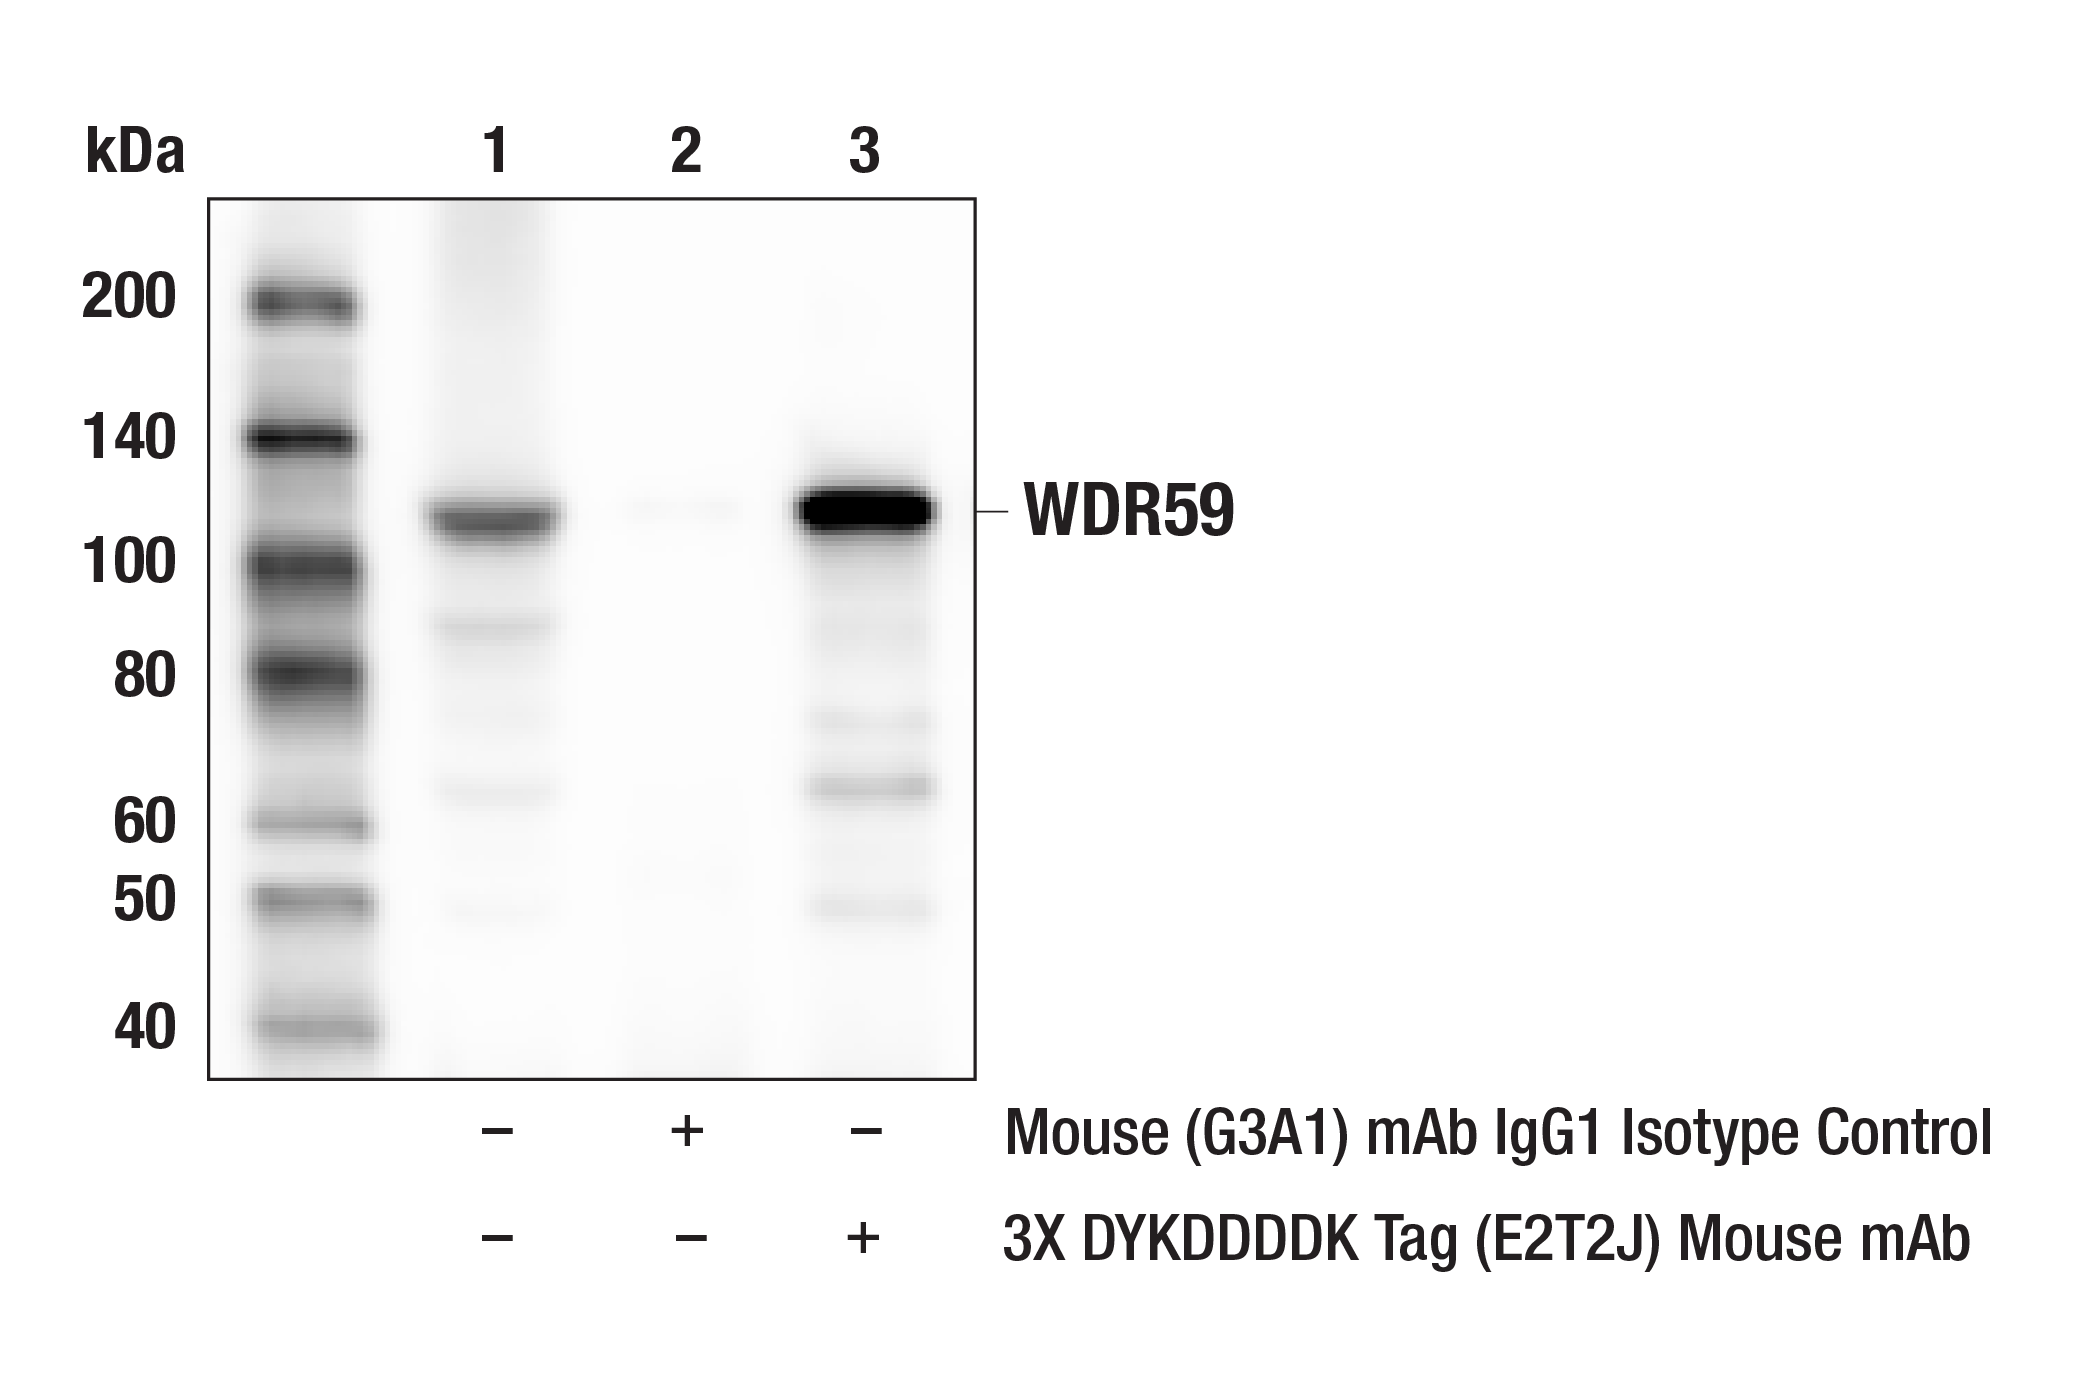 Immunoprecipitation Image 2: 3X DYKDDDDK Tag (E2T2J) Mouse mAb (Binds to same epitope as Sigma-Aldrich Anti-FLAG M2 antibody)